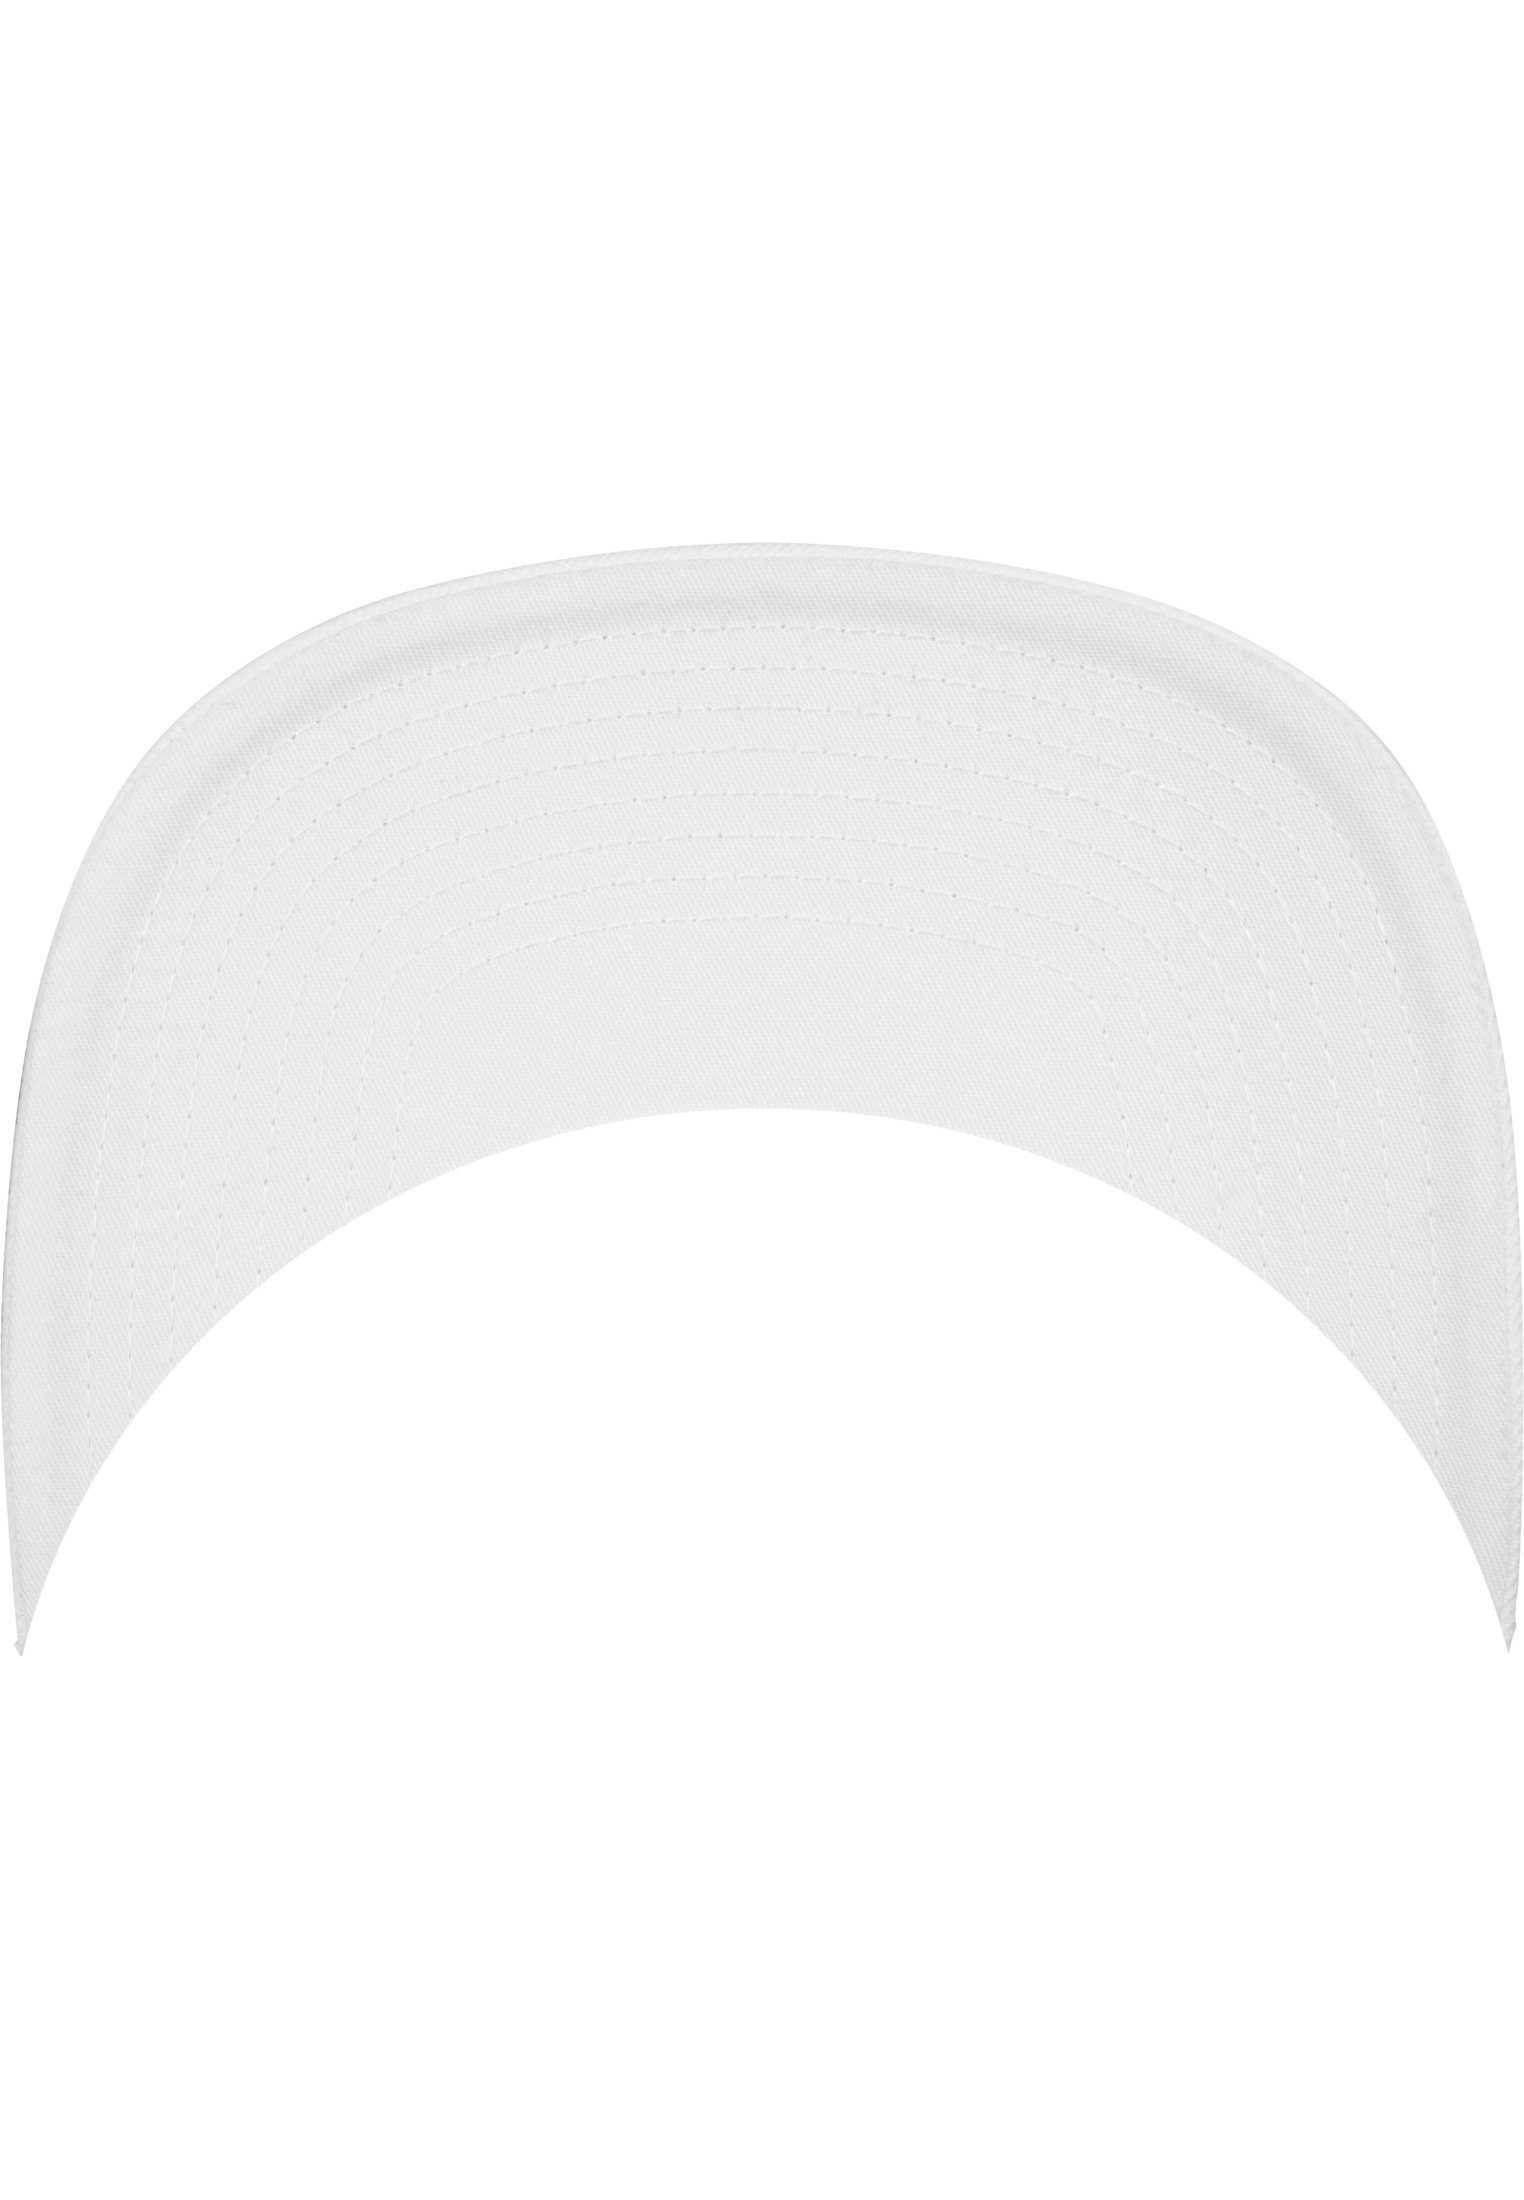 Flexfit Cap Snapback white/white Bandana Snapback Tie Flex